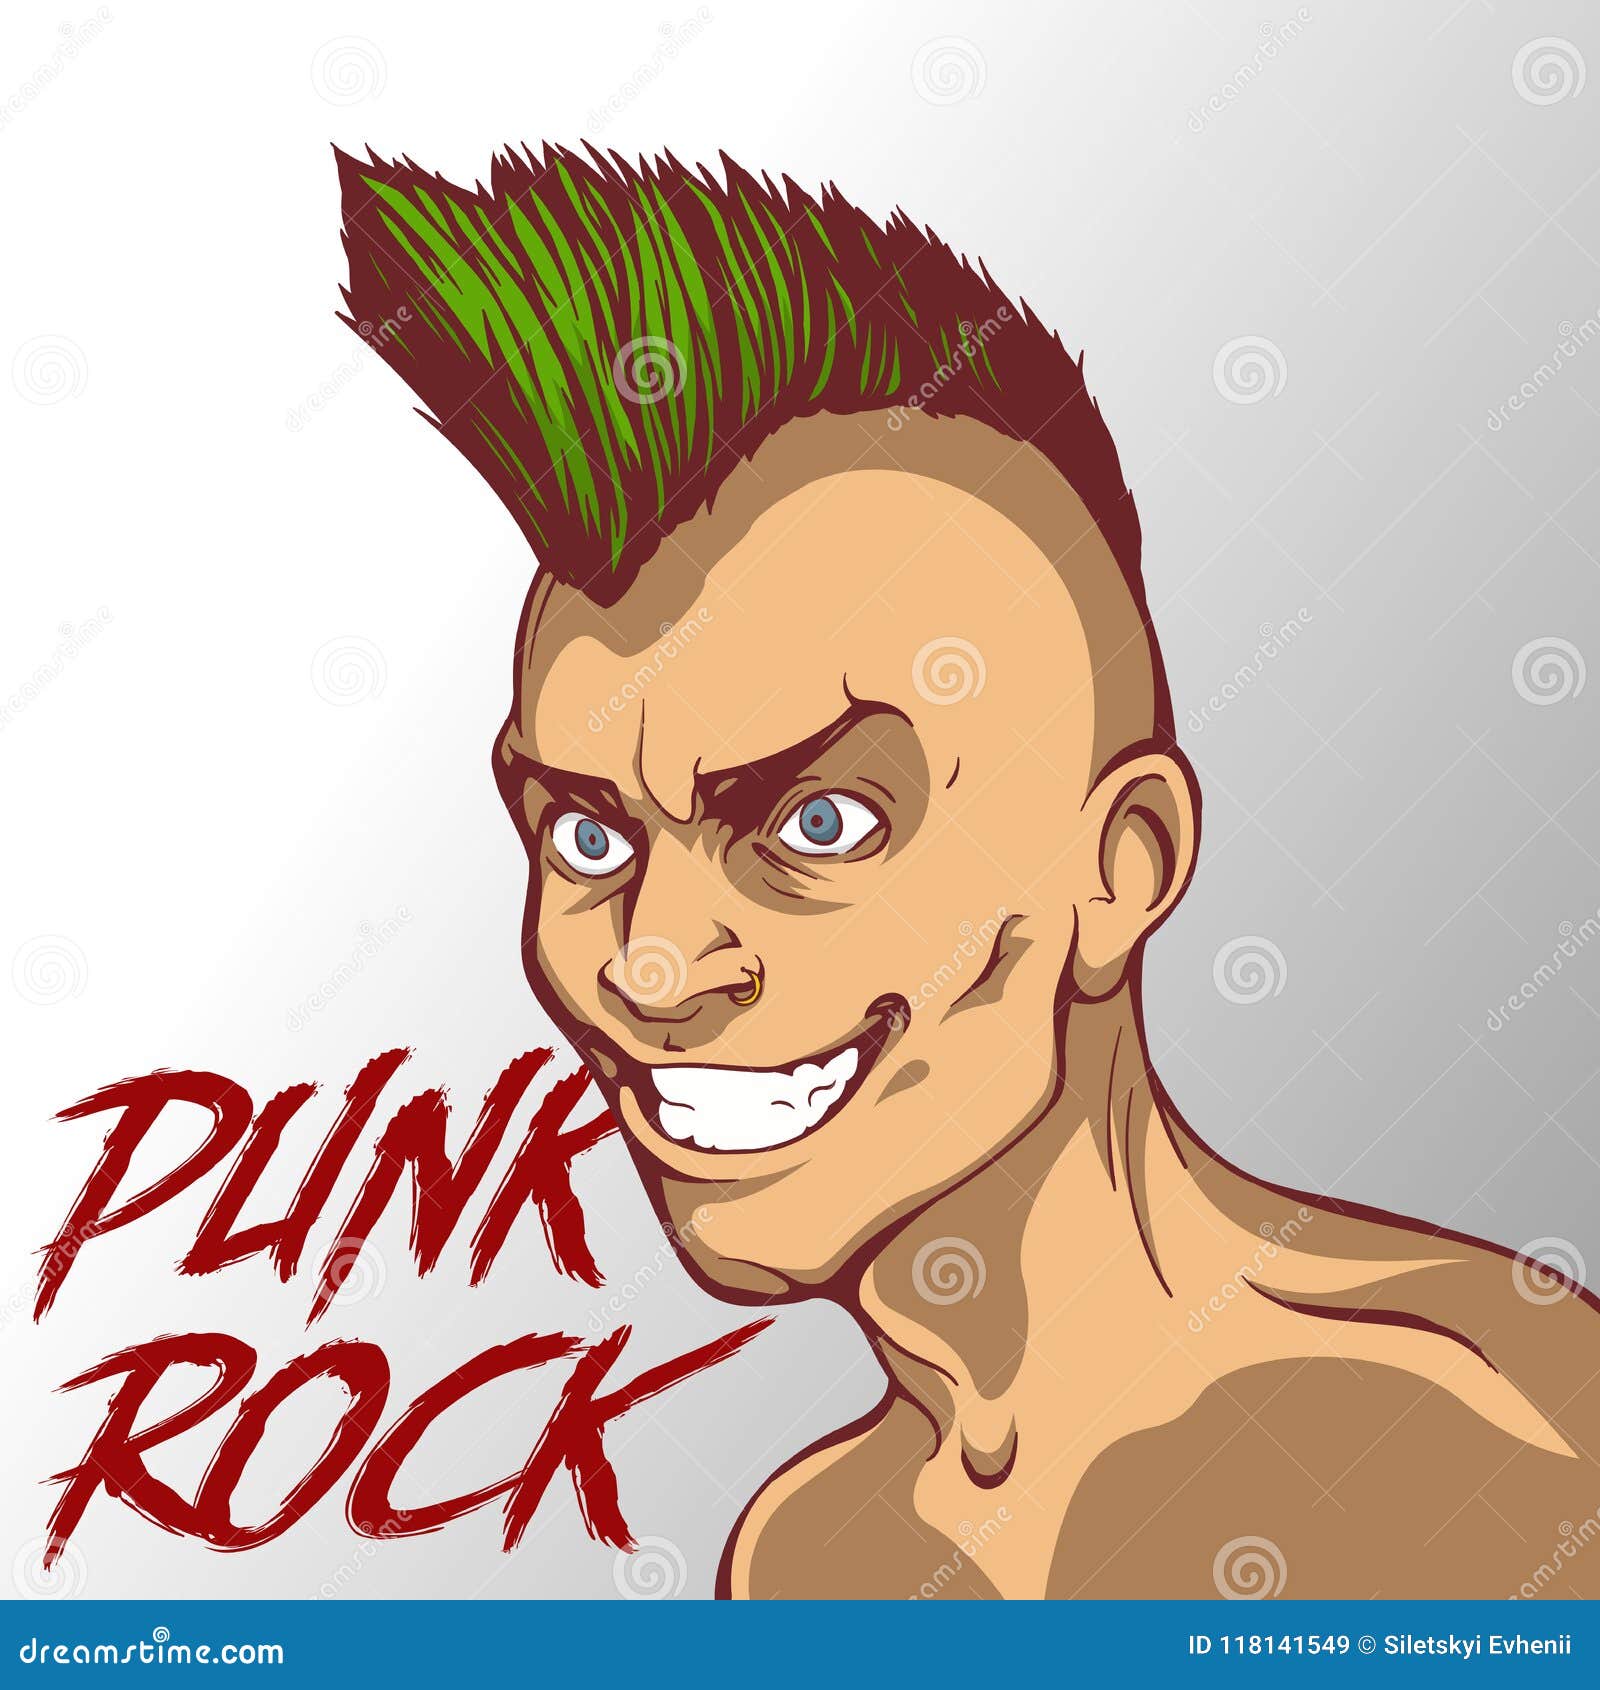 punk mohawk hairstyles for women